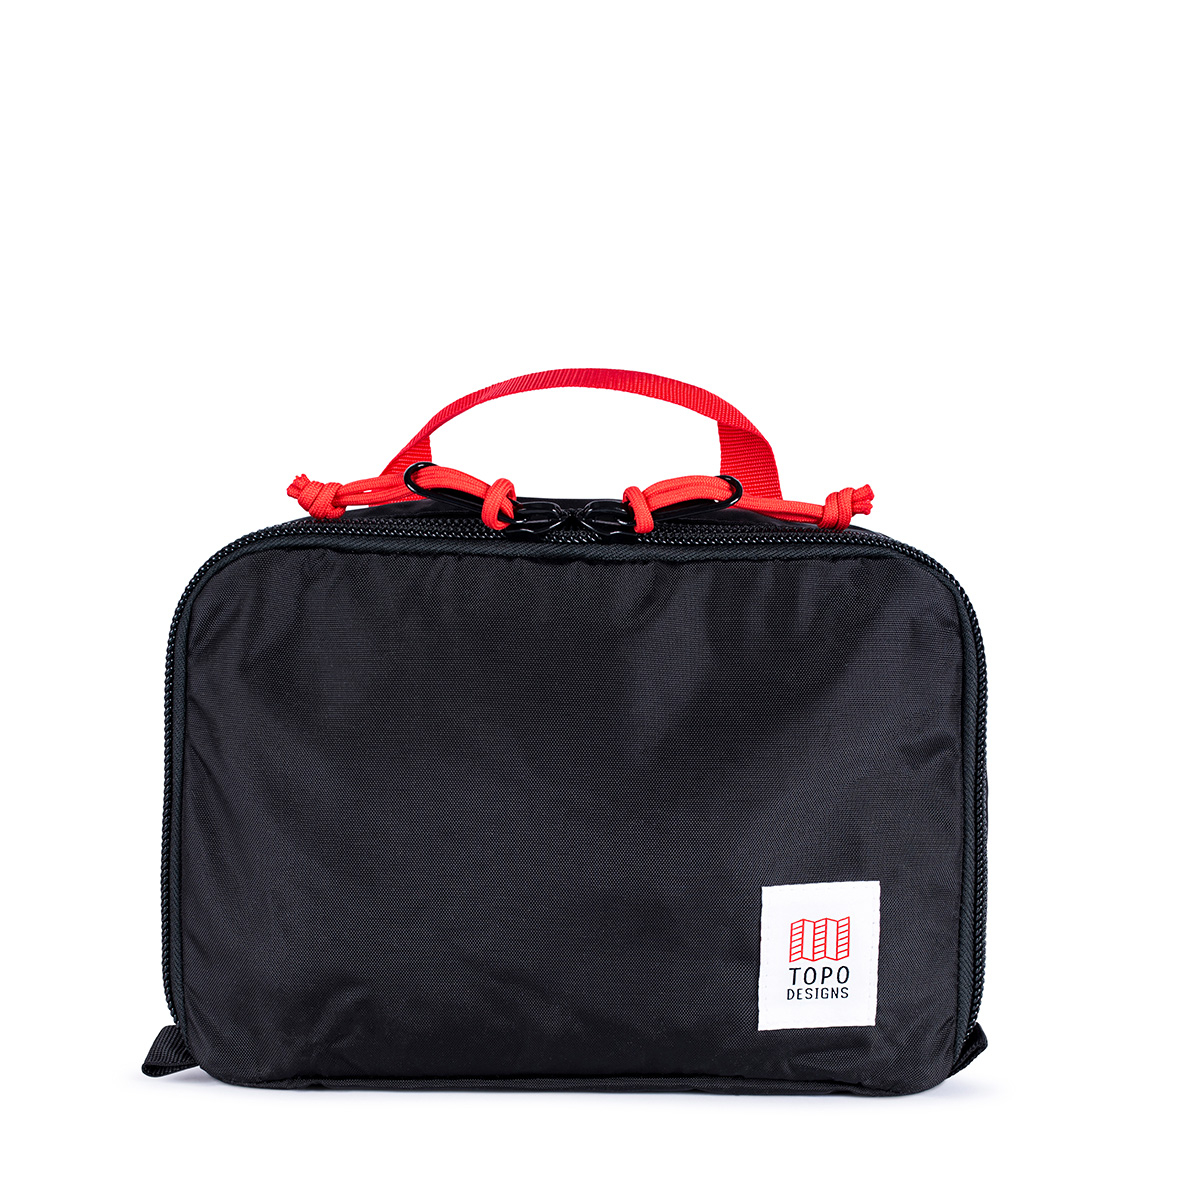 Topo Designs Pack Bag 5L Black, het optimaliseren van je bagage is nog nooit zo eenvoudig geweest